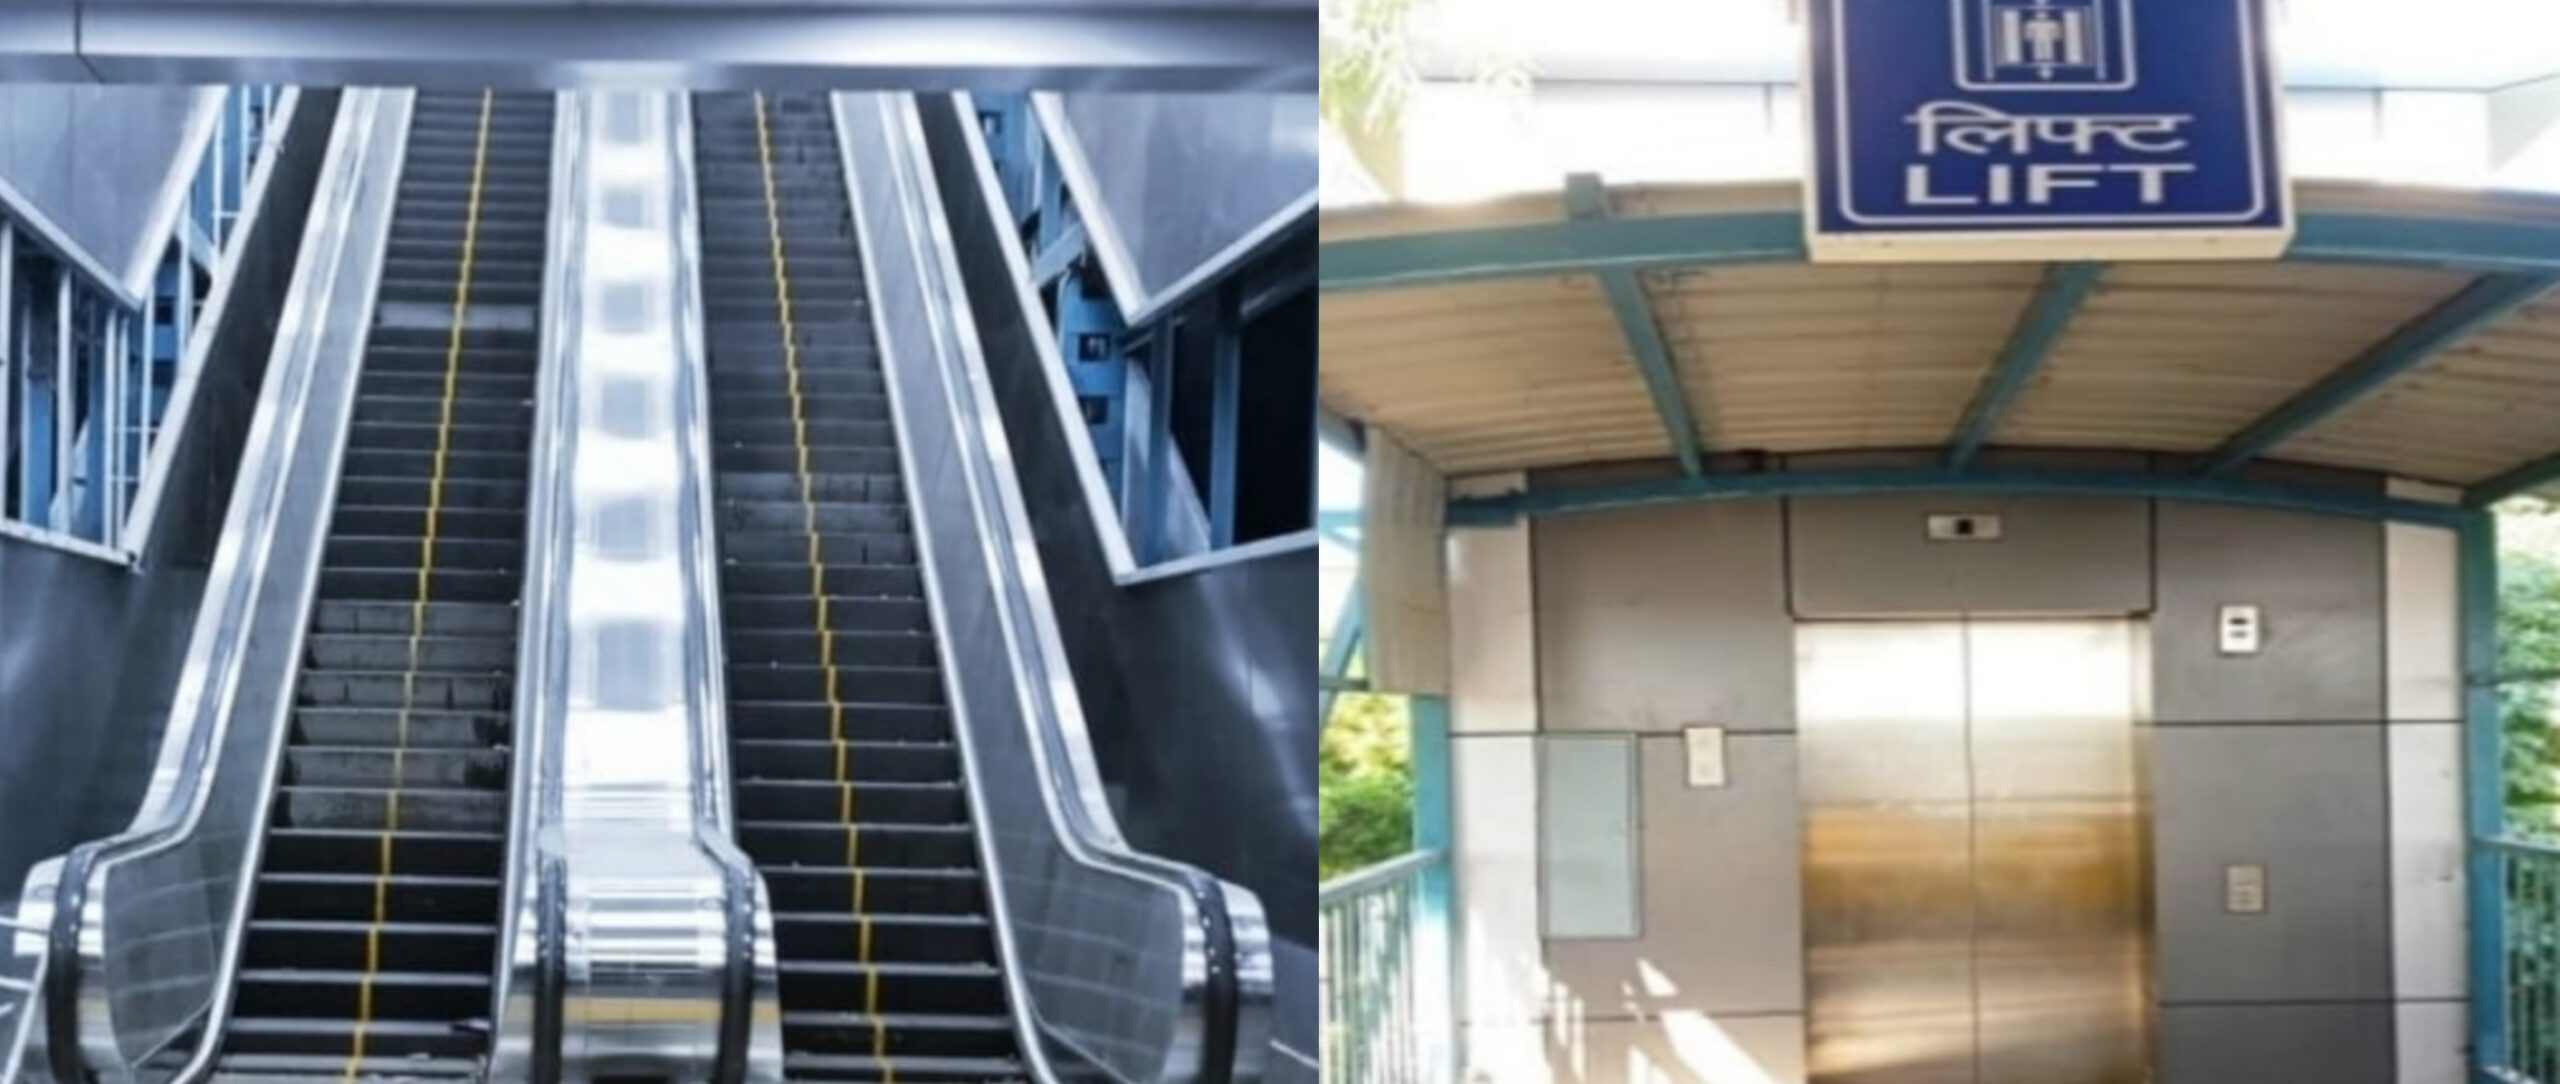 three-lifts-and-four-escalators-installed-at-bhagat-ki-kothi-railway-station